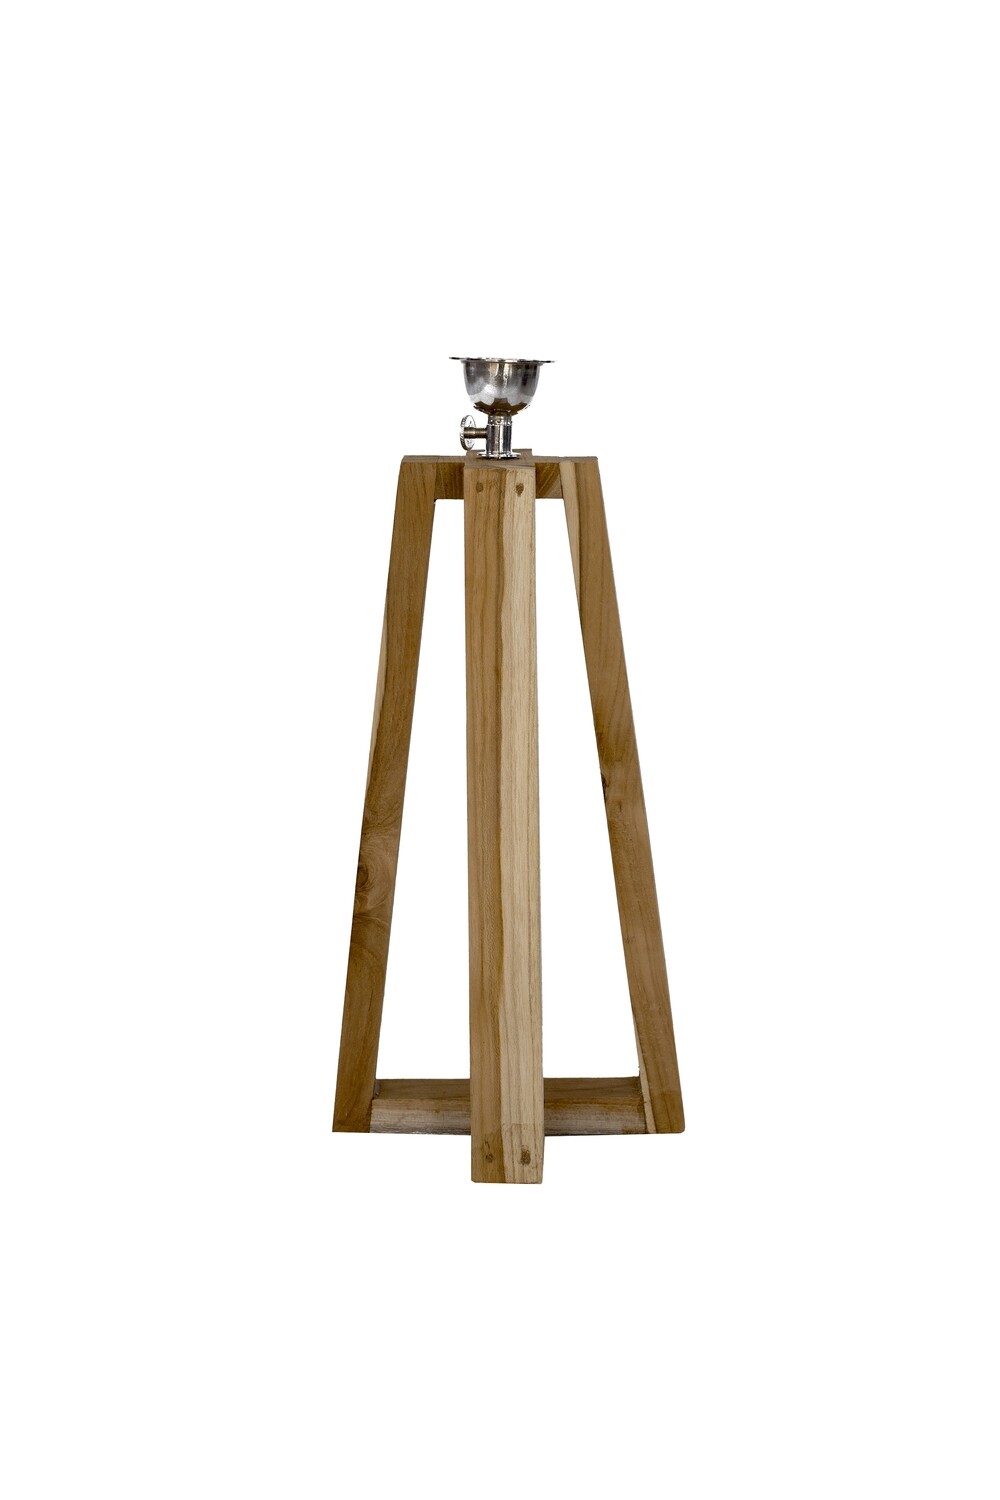 Teak Bedside Table Lamp Stand (35cm)